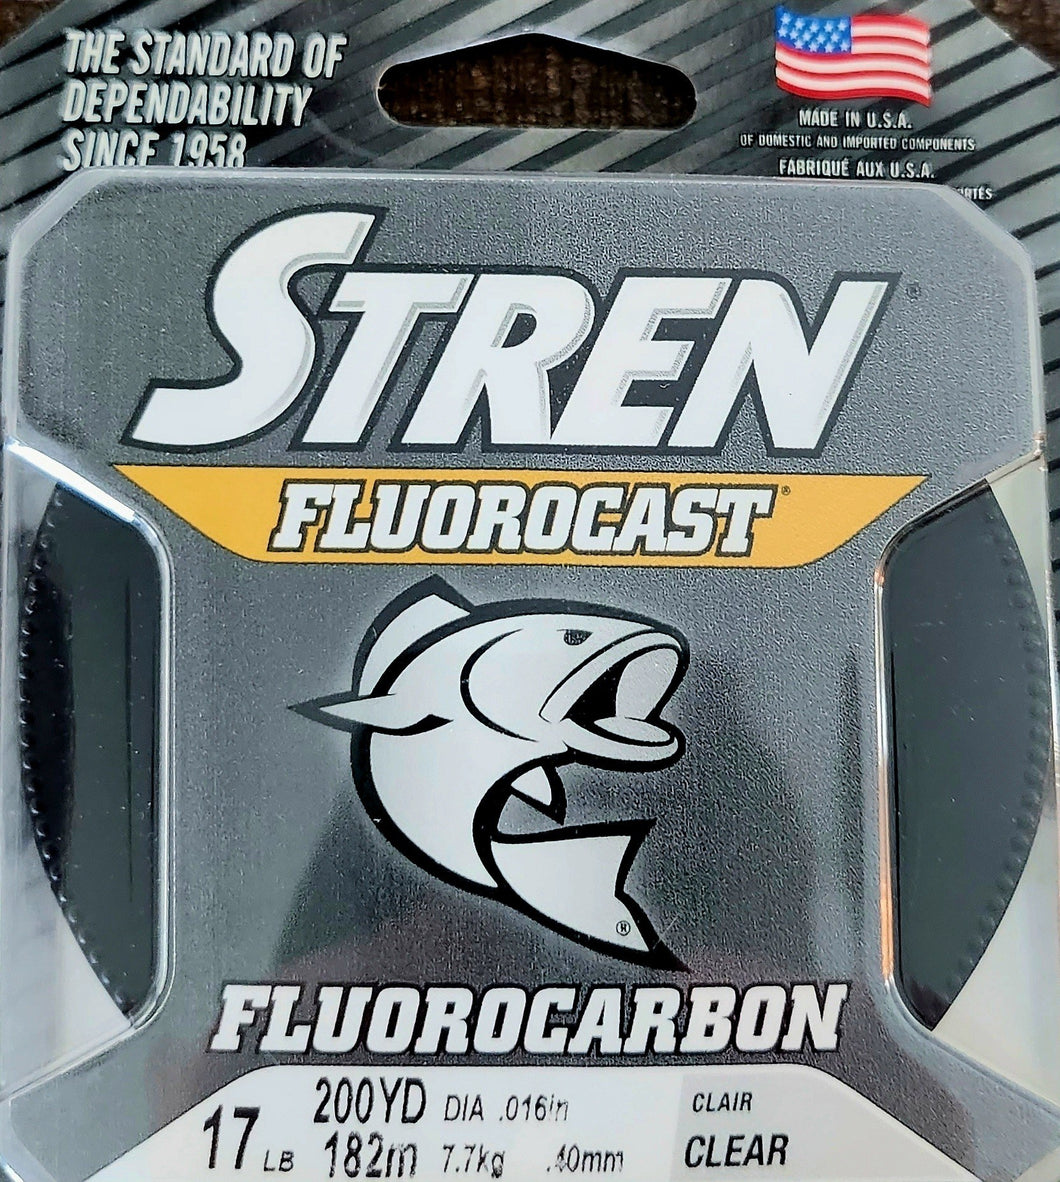 Stren Fluorocast Fluorocarbon line